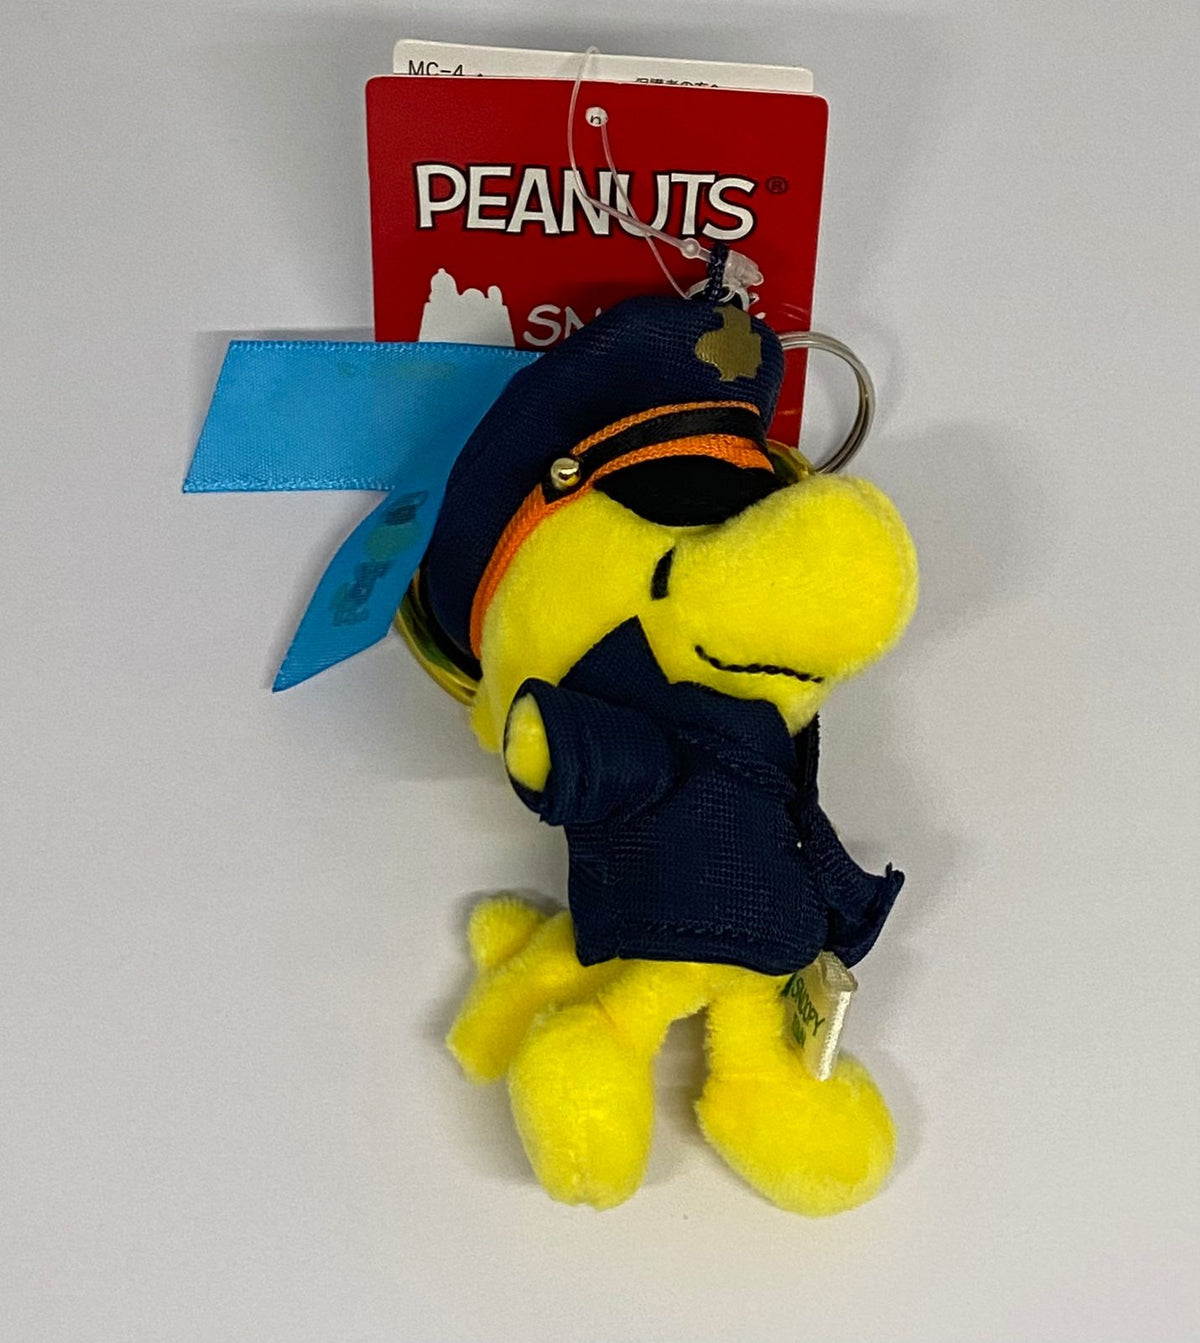 Custom Peanuts & Snoopy Keychains - Shop